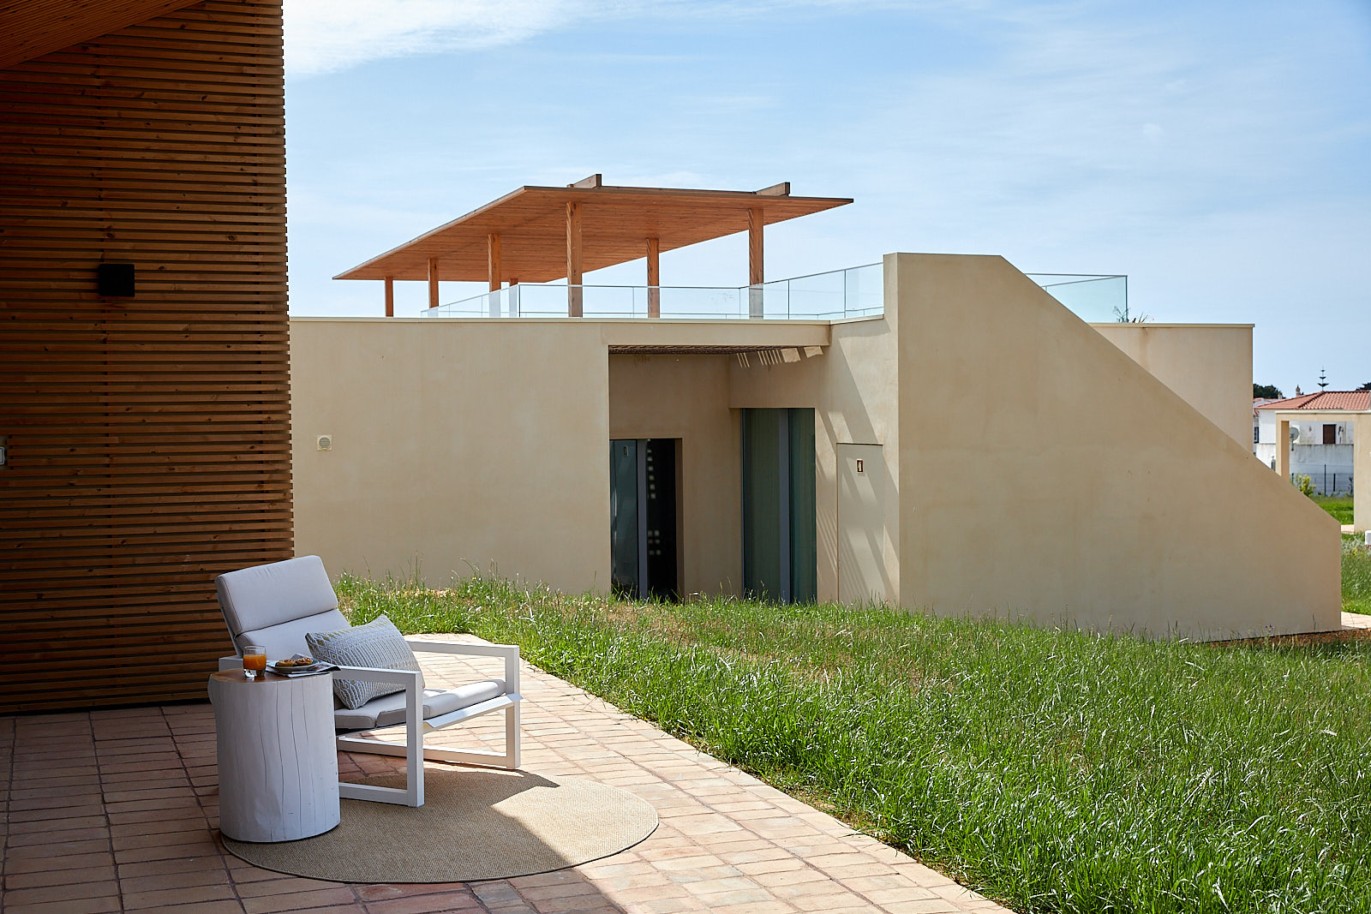 1 bedroom apartment in resort, for sale in Porches, Algarve_228996